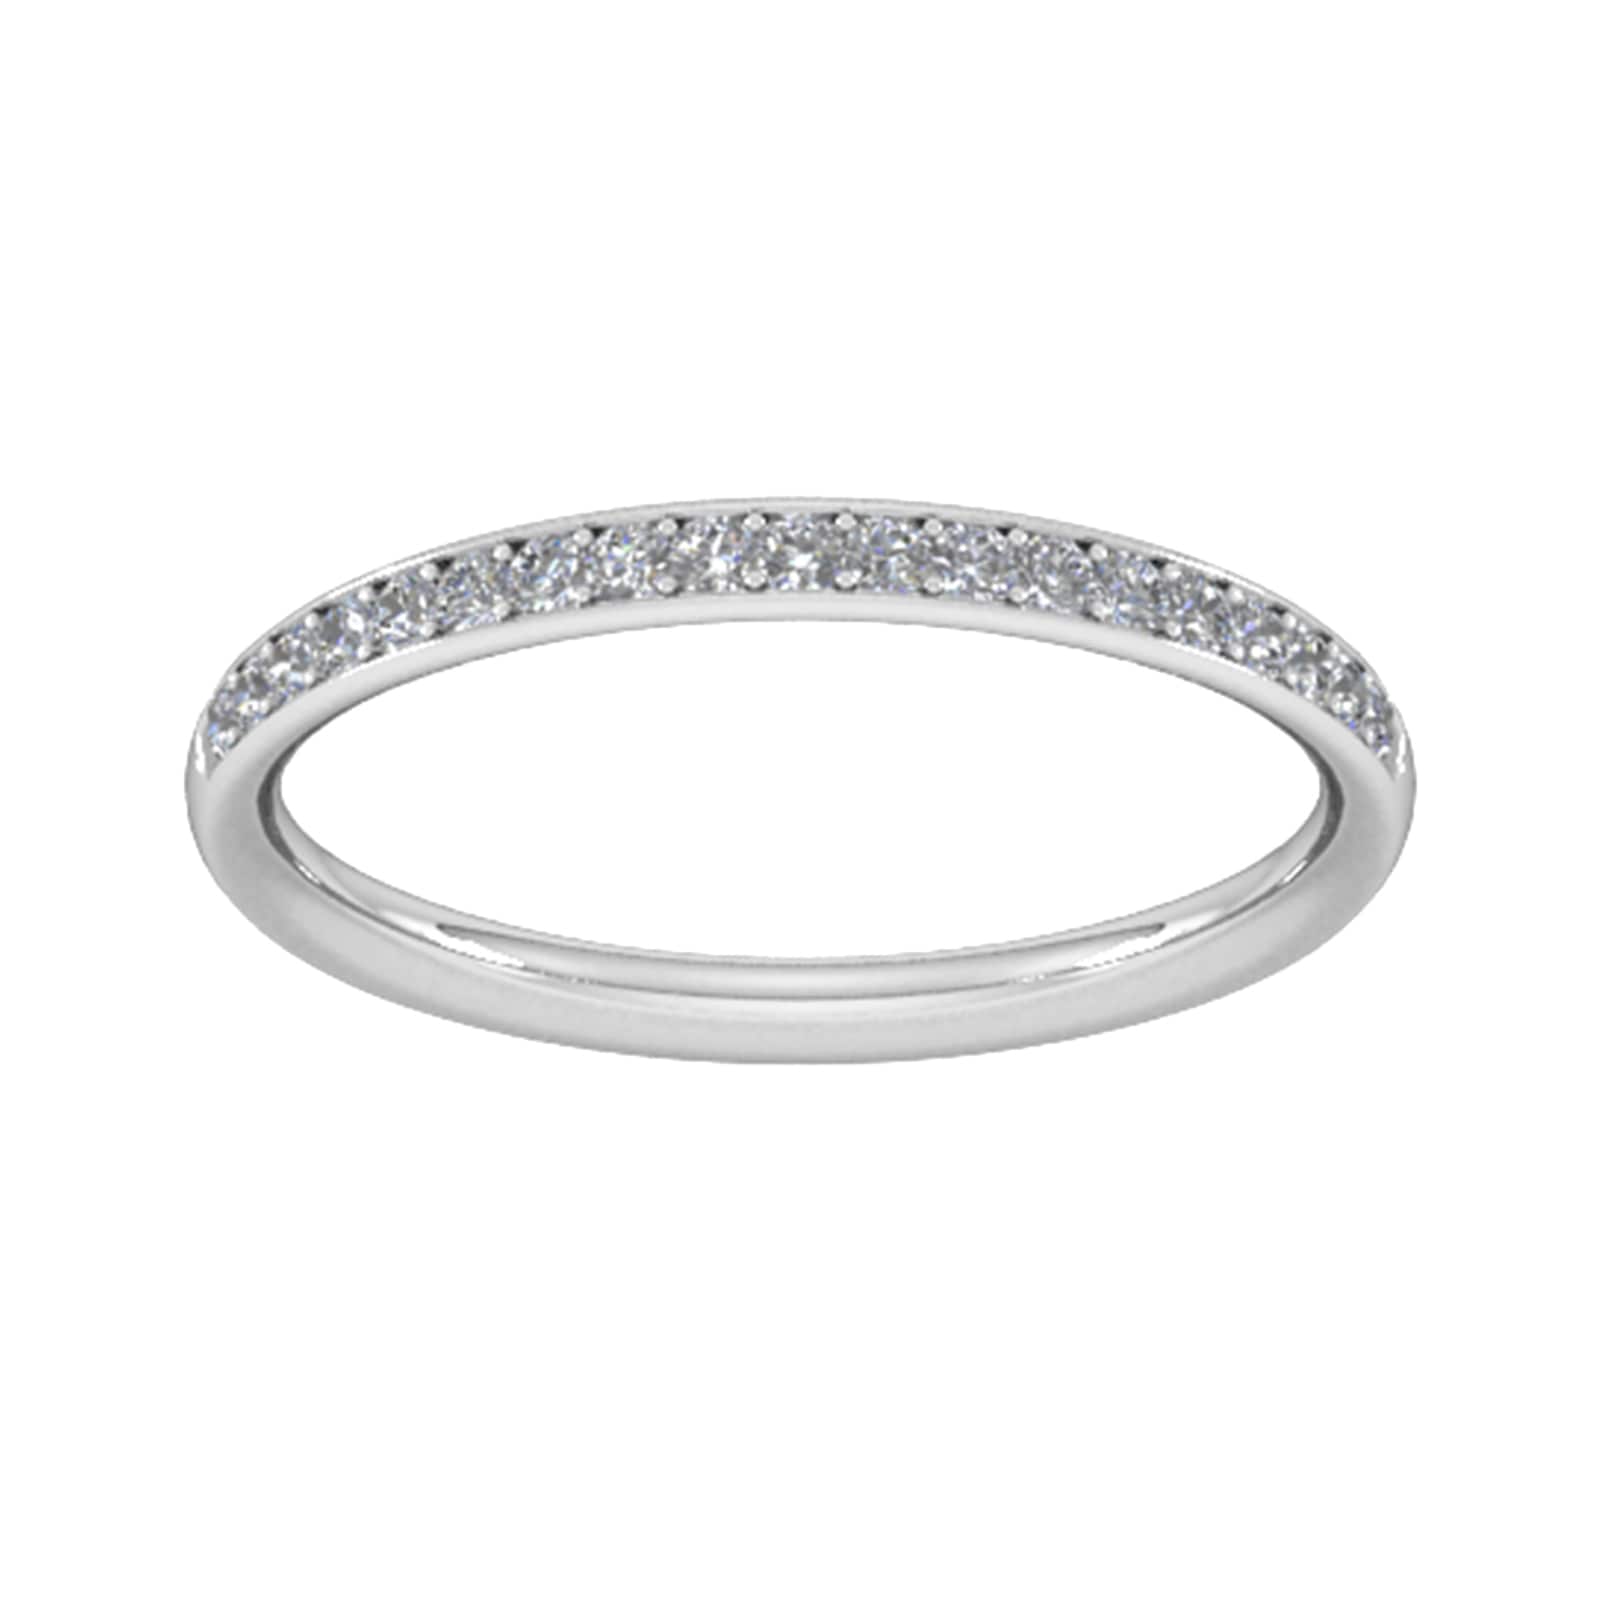 0.18 Carat Total Weight Brilliant Cut Grain Set Diamond Wedding Ring In Platinum - Ring Size H